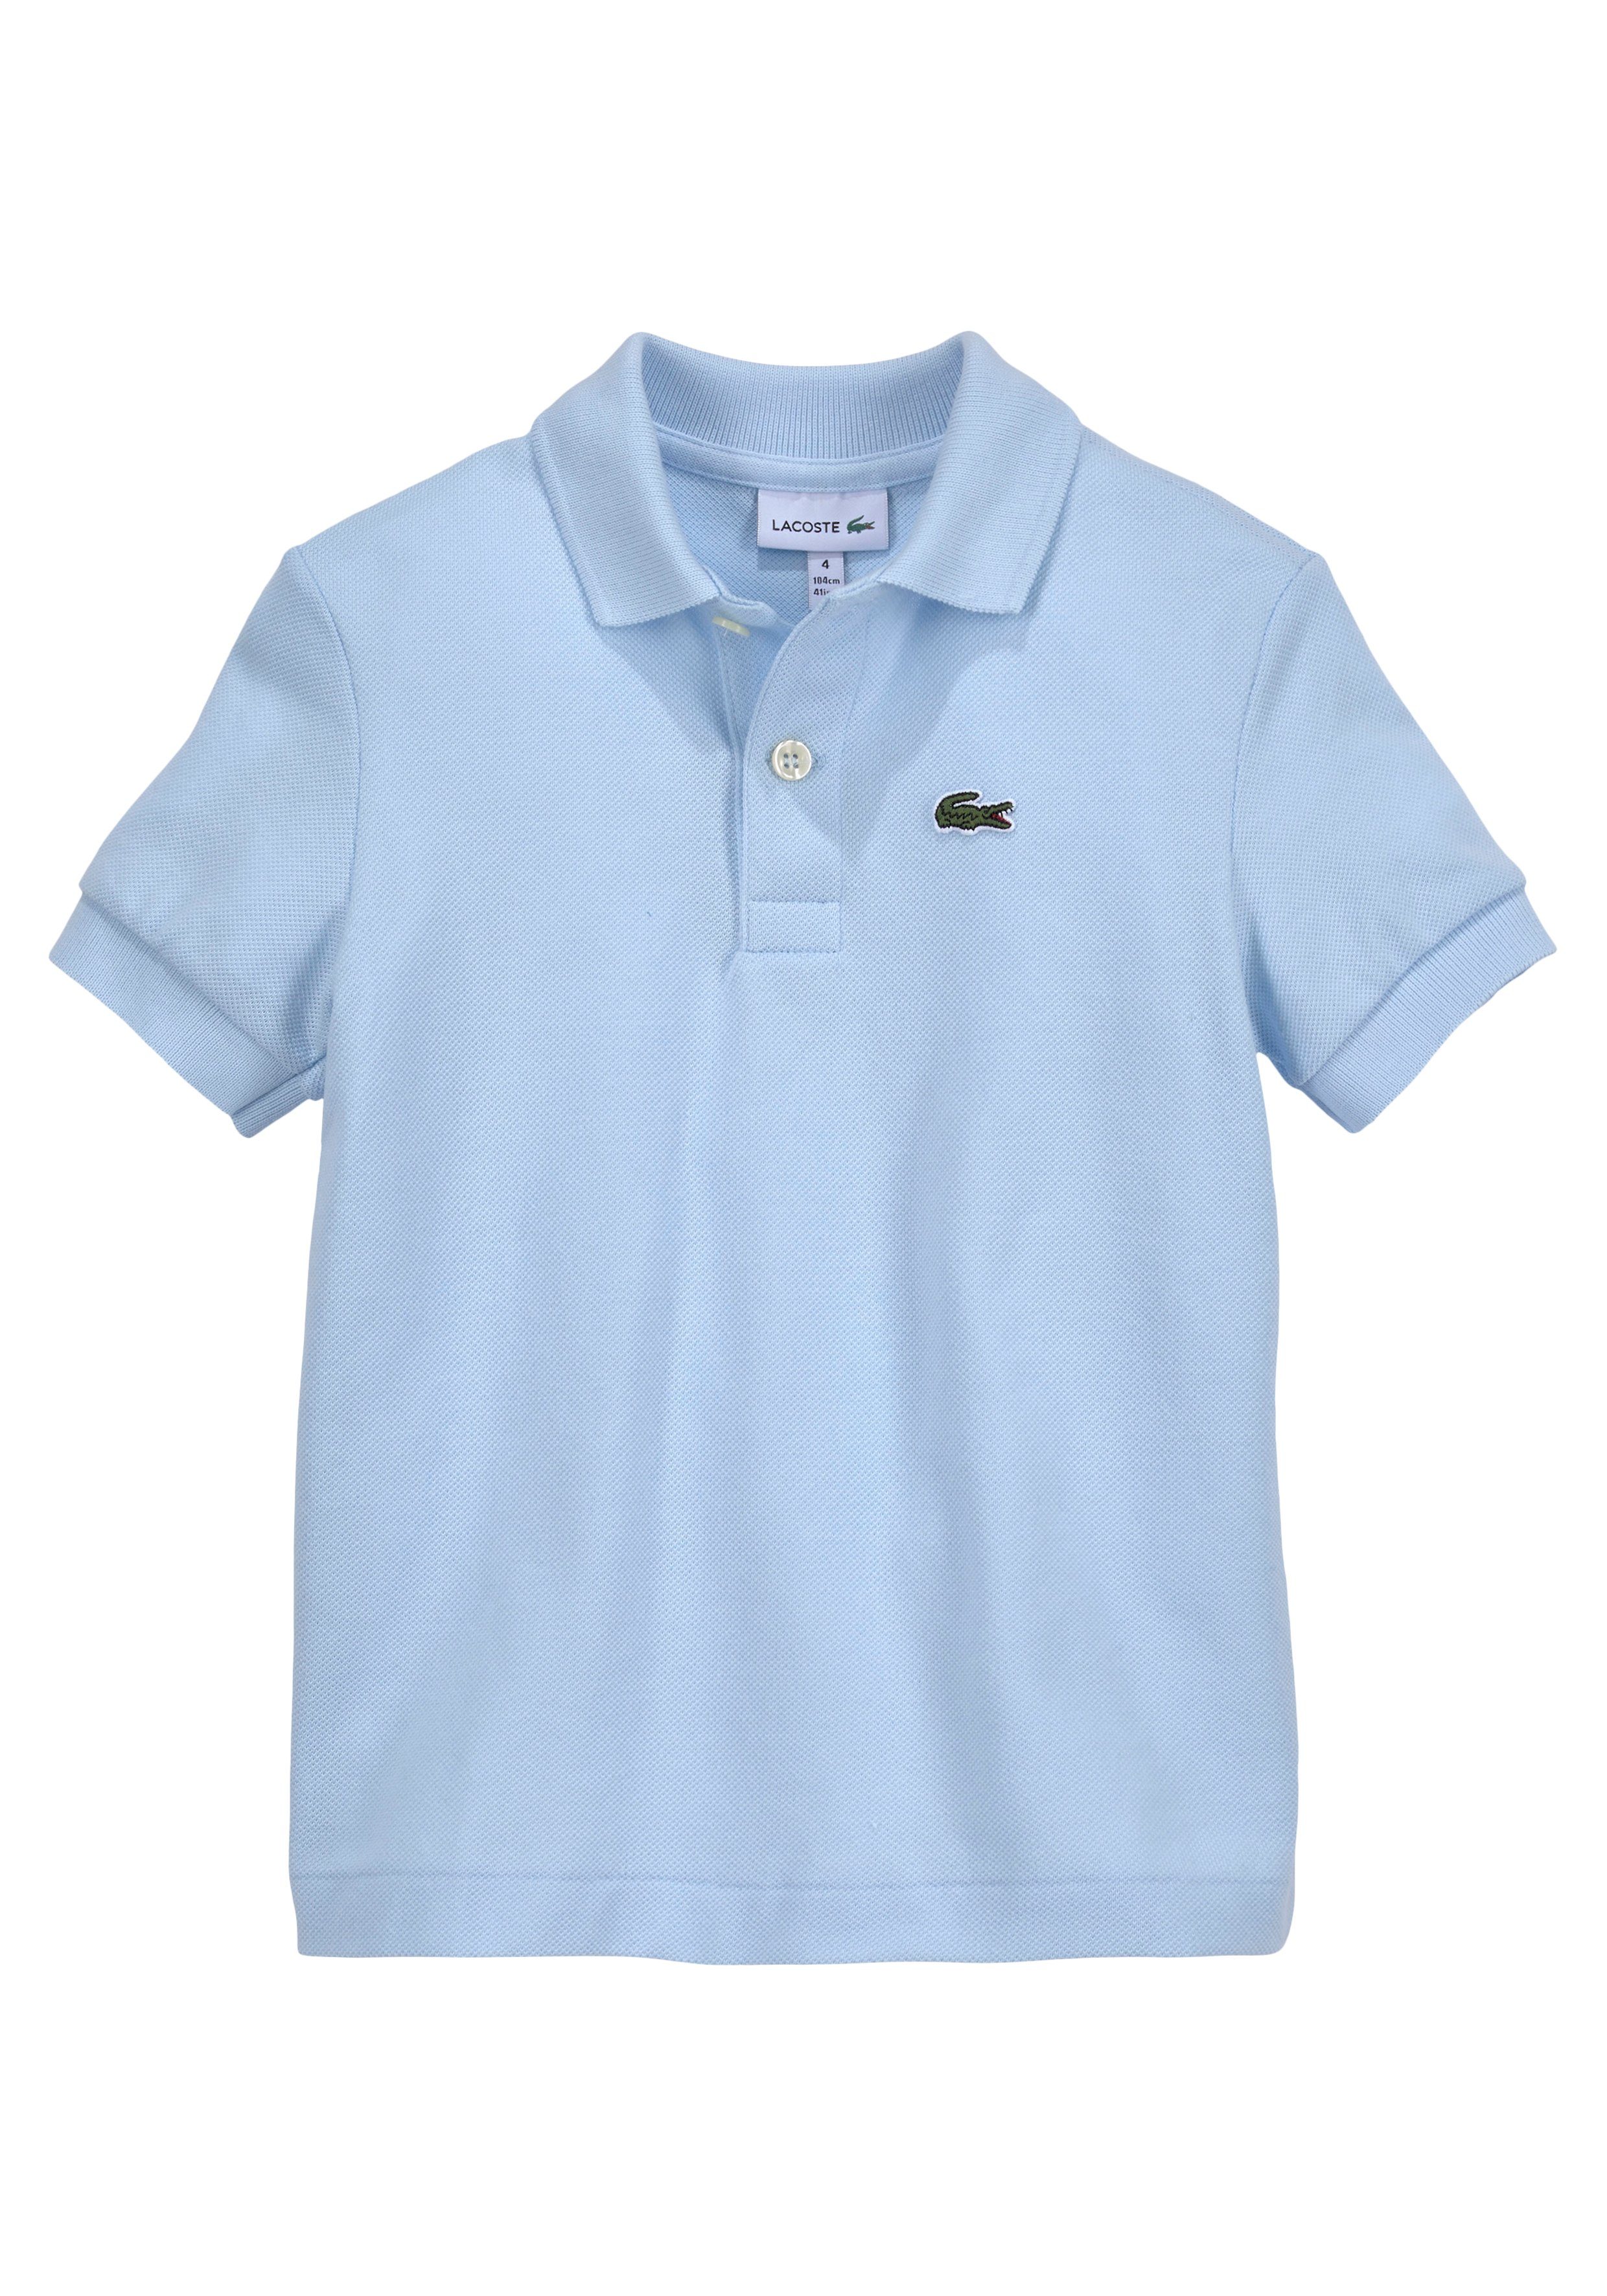 Beliebter Artikel Lacoste Poloshirt Kinder Kids Junior Polo Kids hellblau mit aufgesticktem MiniMe,Junior, Kroko